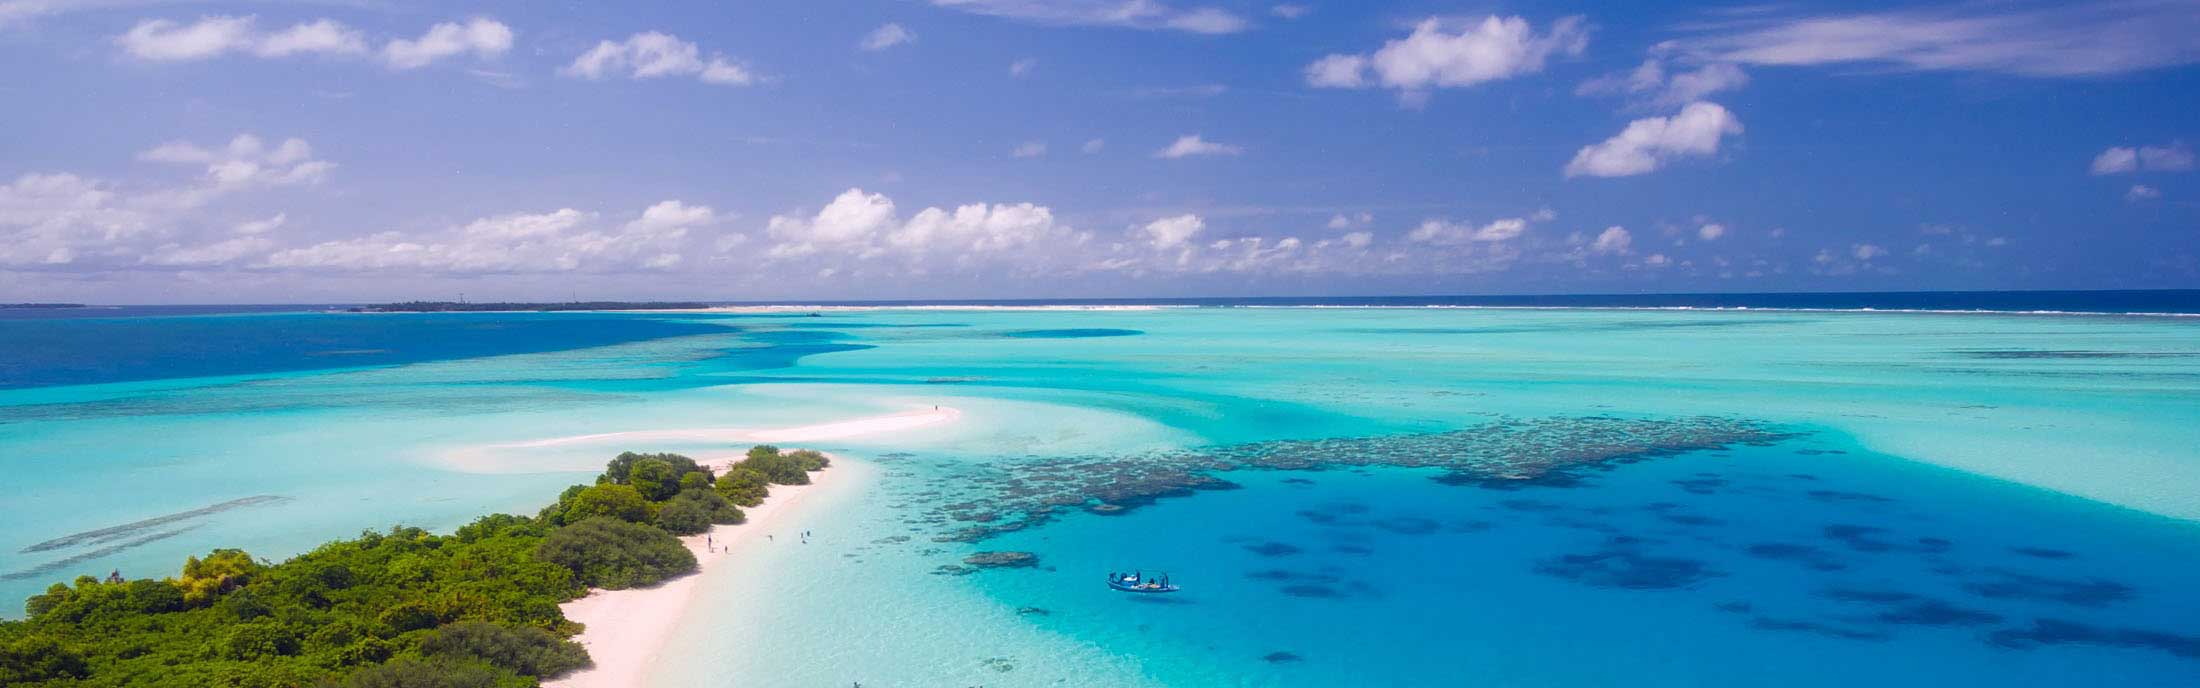 Voyage Maldives : Île de l'atoll des Maldives en océan indien